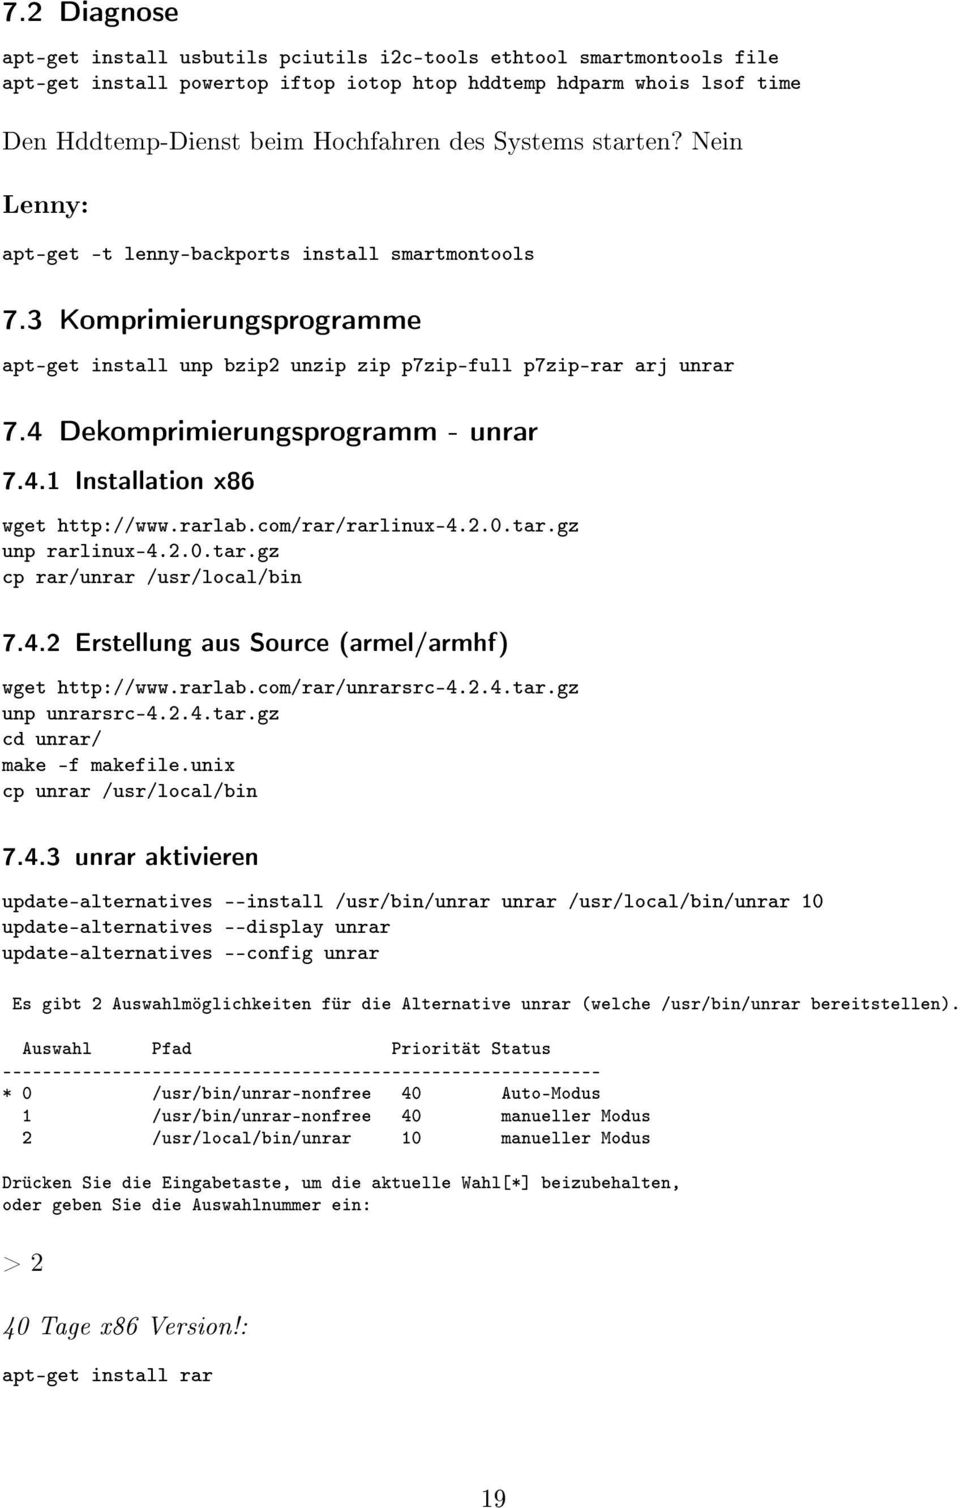 4 Dekomprimierungsprogramm - unrar 7.4.1 Installation x86 wget http://www.rarlab.com/rar/rarlinux-4.2.0.tar.gz unp rarlinux-4.2.0.tar.gz cp rar/unrar /usr/local/bin 7.4.2 Erstellung aus Source (armel/armhf) wget http://www.